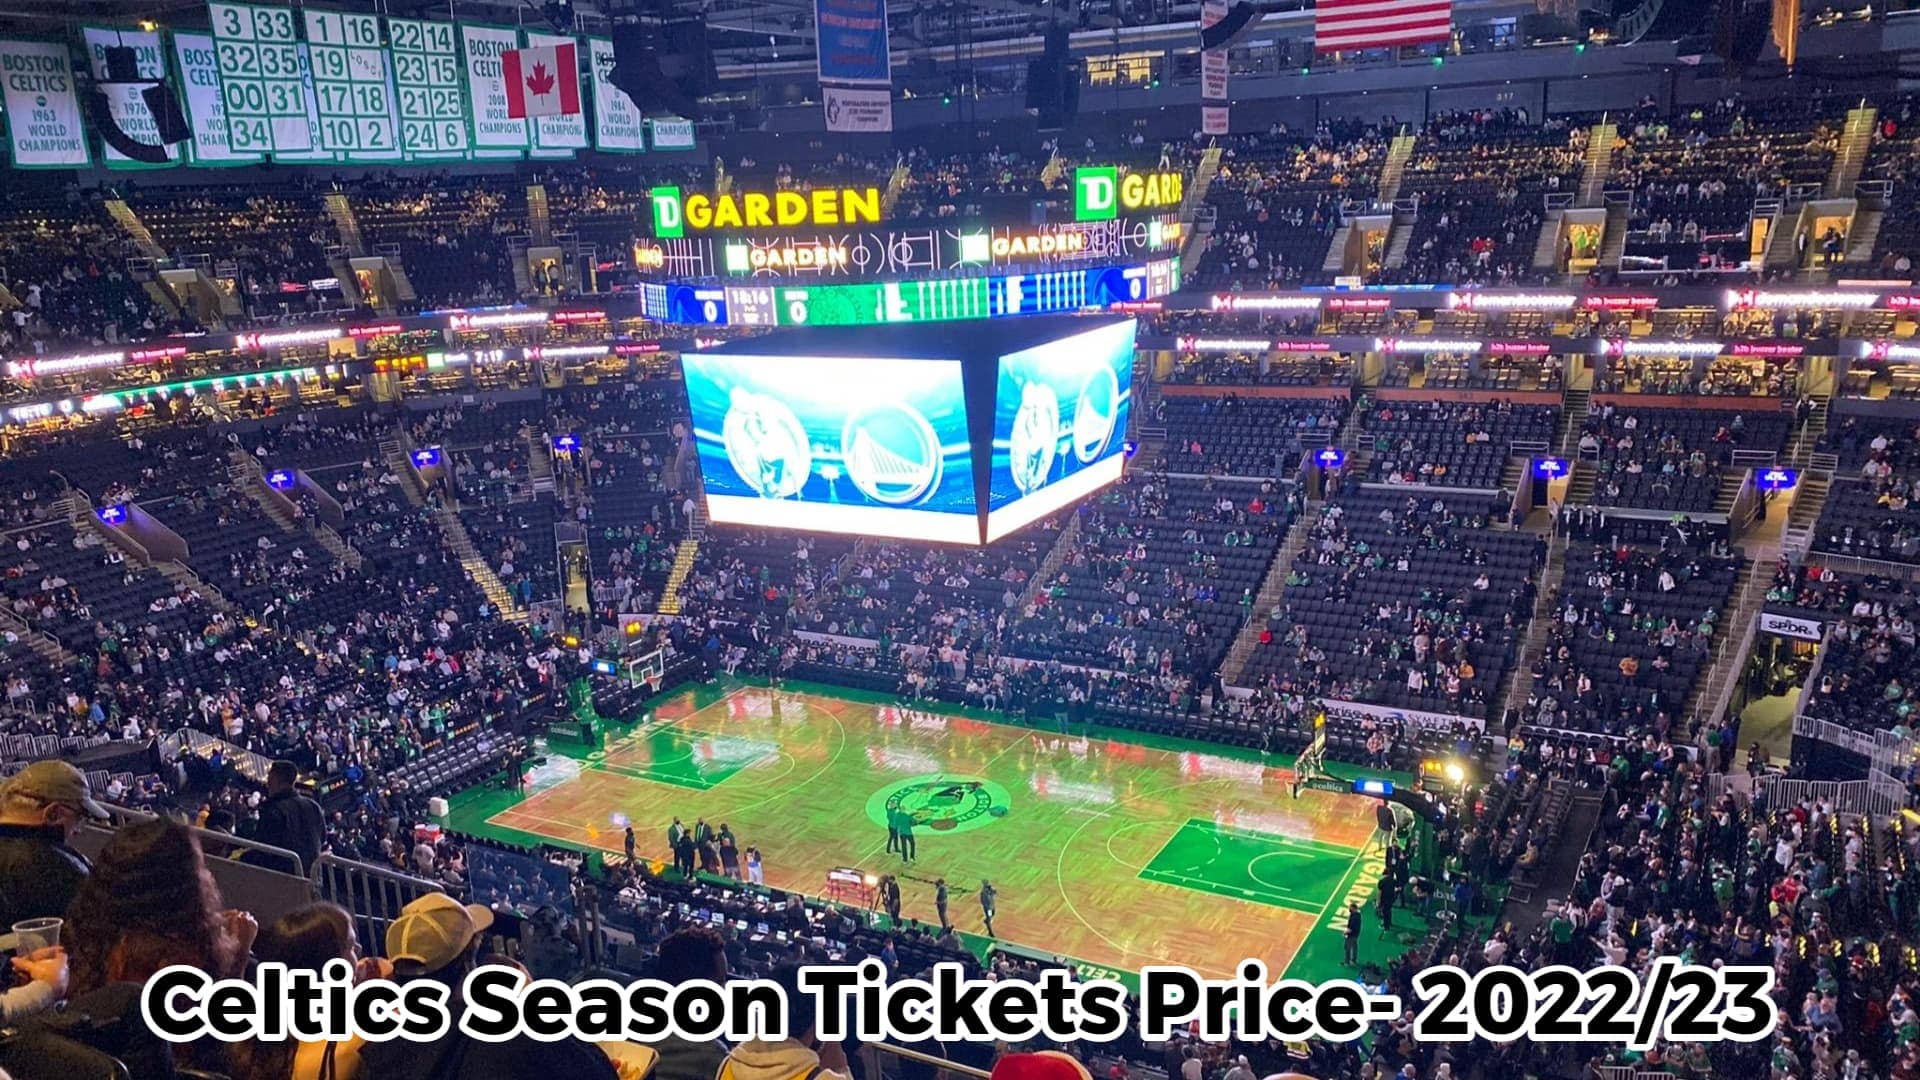 Celtics Season Tickets Price: How much are Boston Celtics tickets?